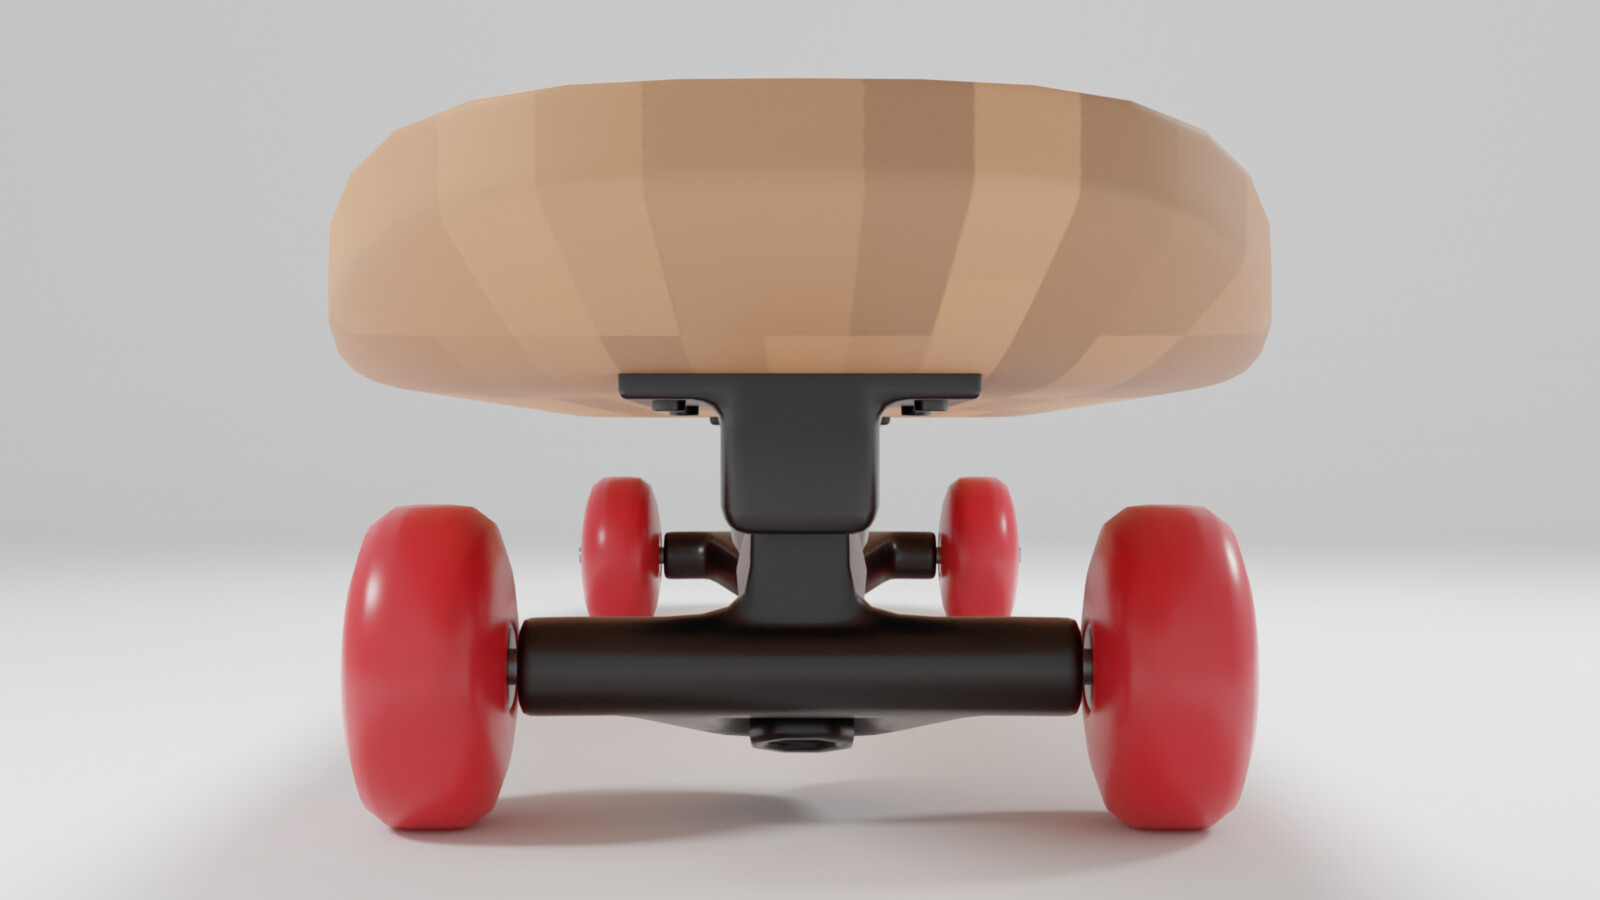 Wooden Skateboard render 2